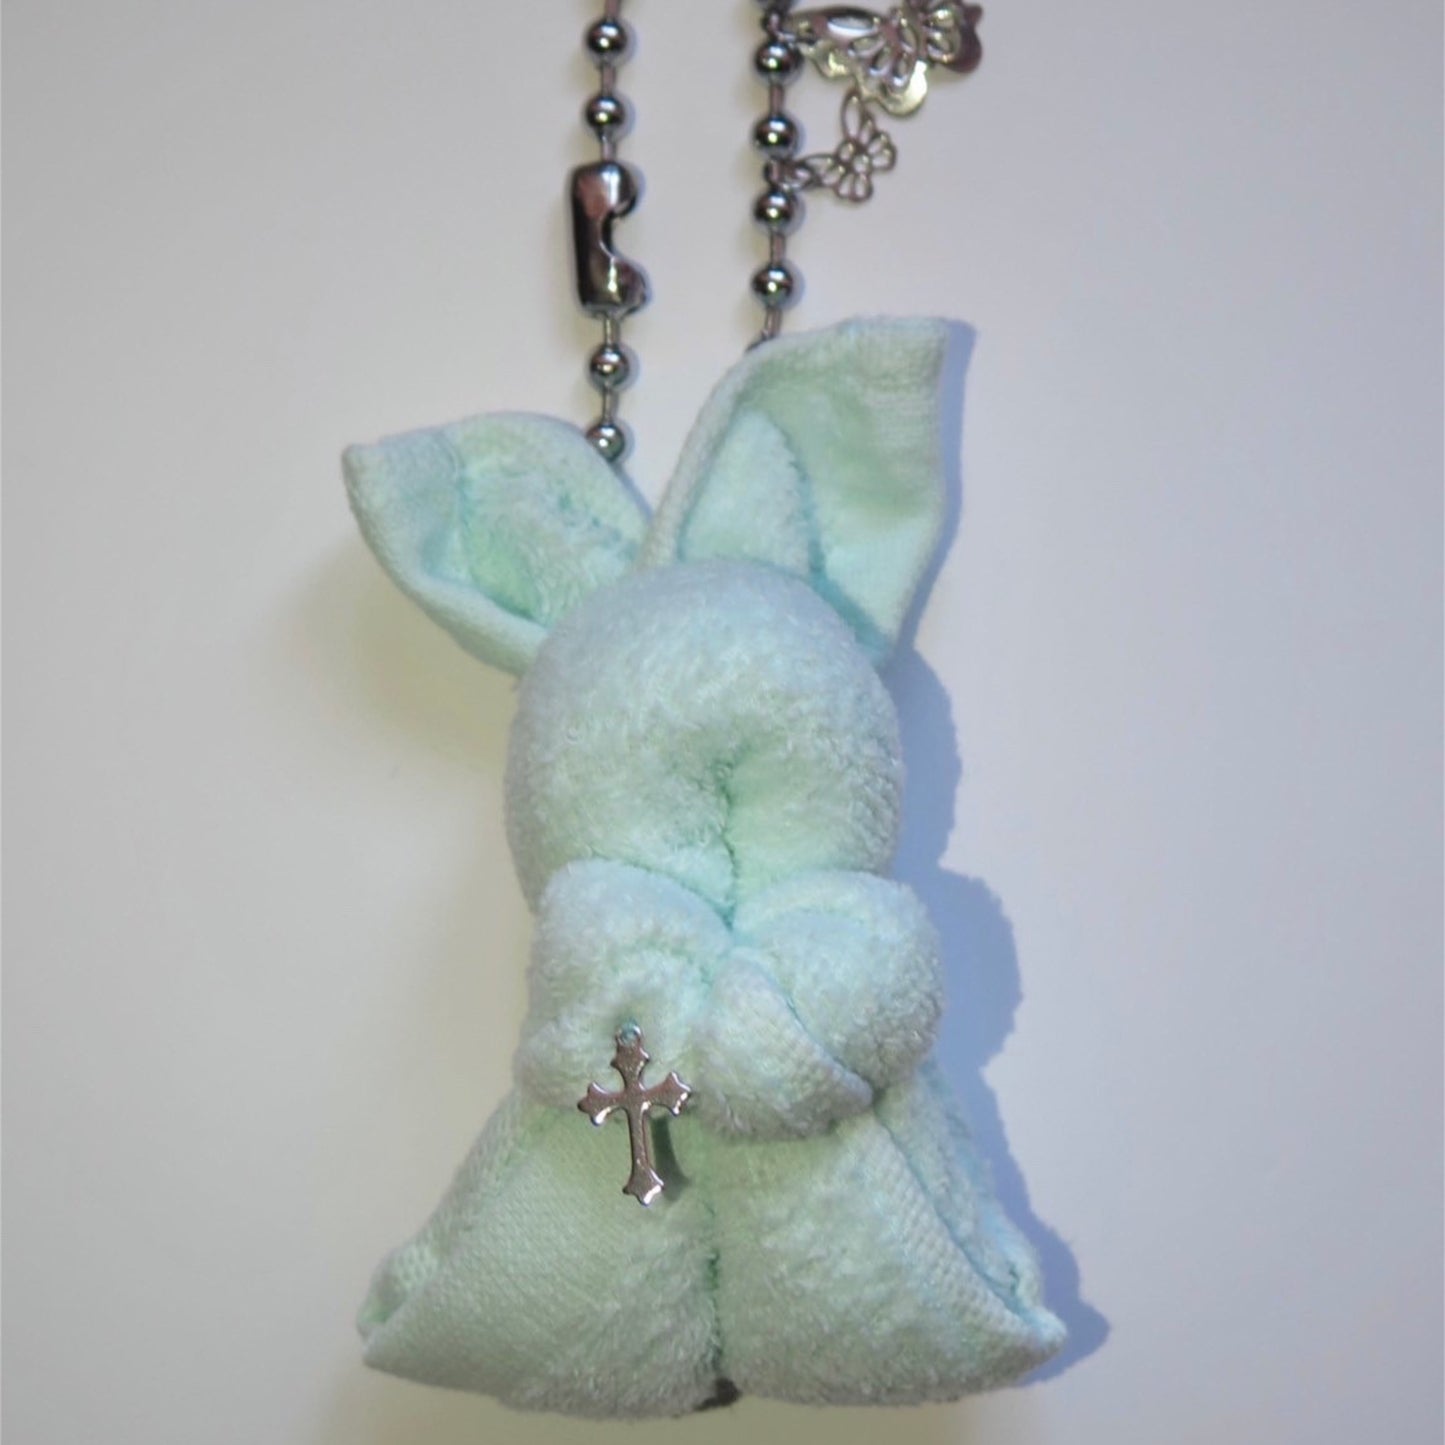 【SHEEP SOUVENIR】towel creature key chain / rabbit / pale green / タオルキーチェーン